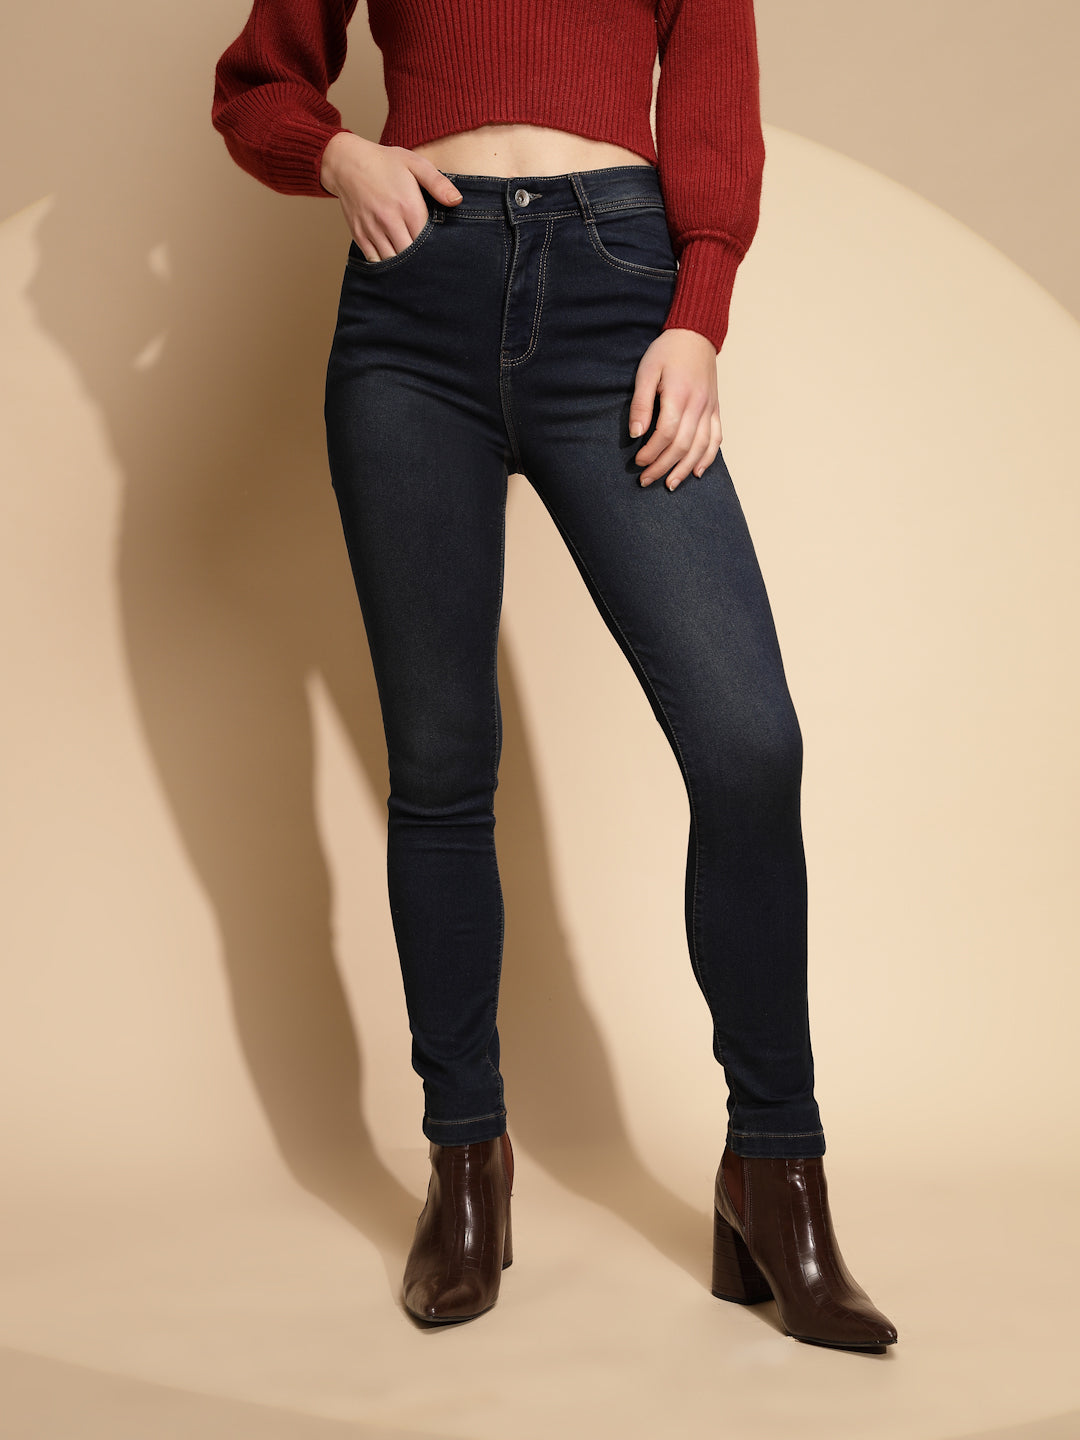 Buy Stylish Jeans for Women Online - Global Republic